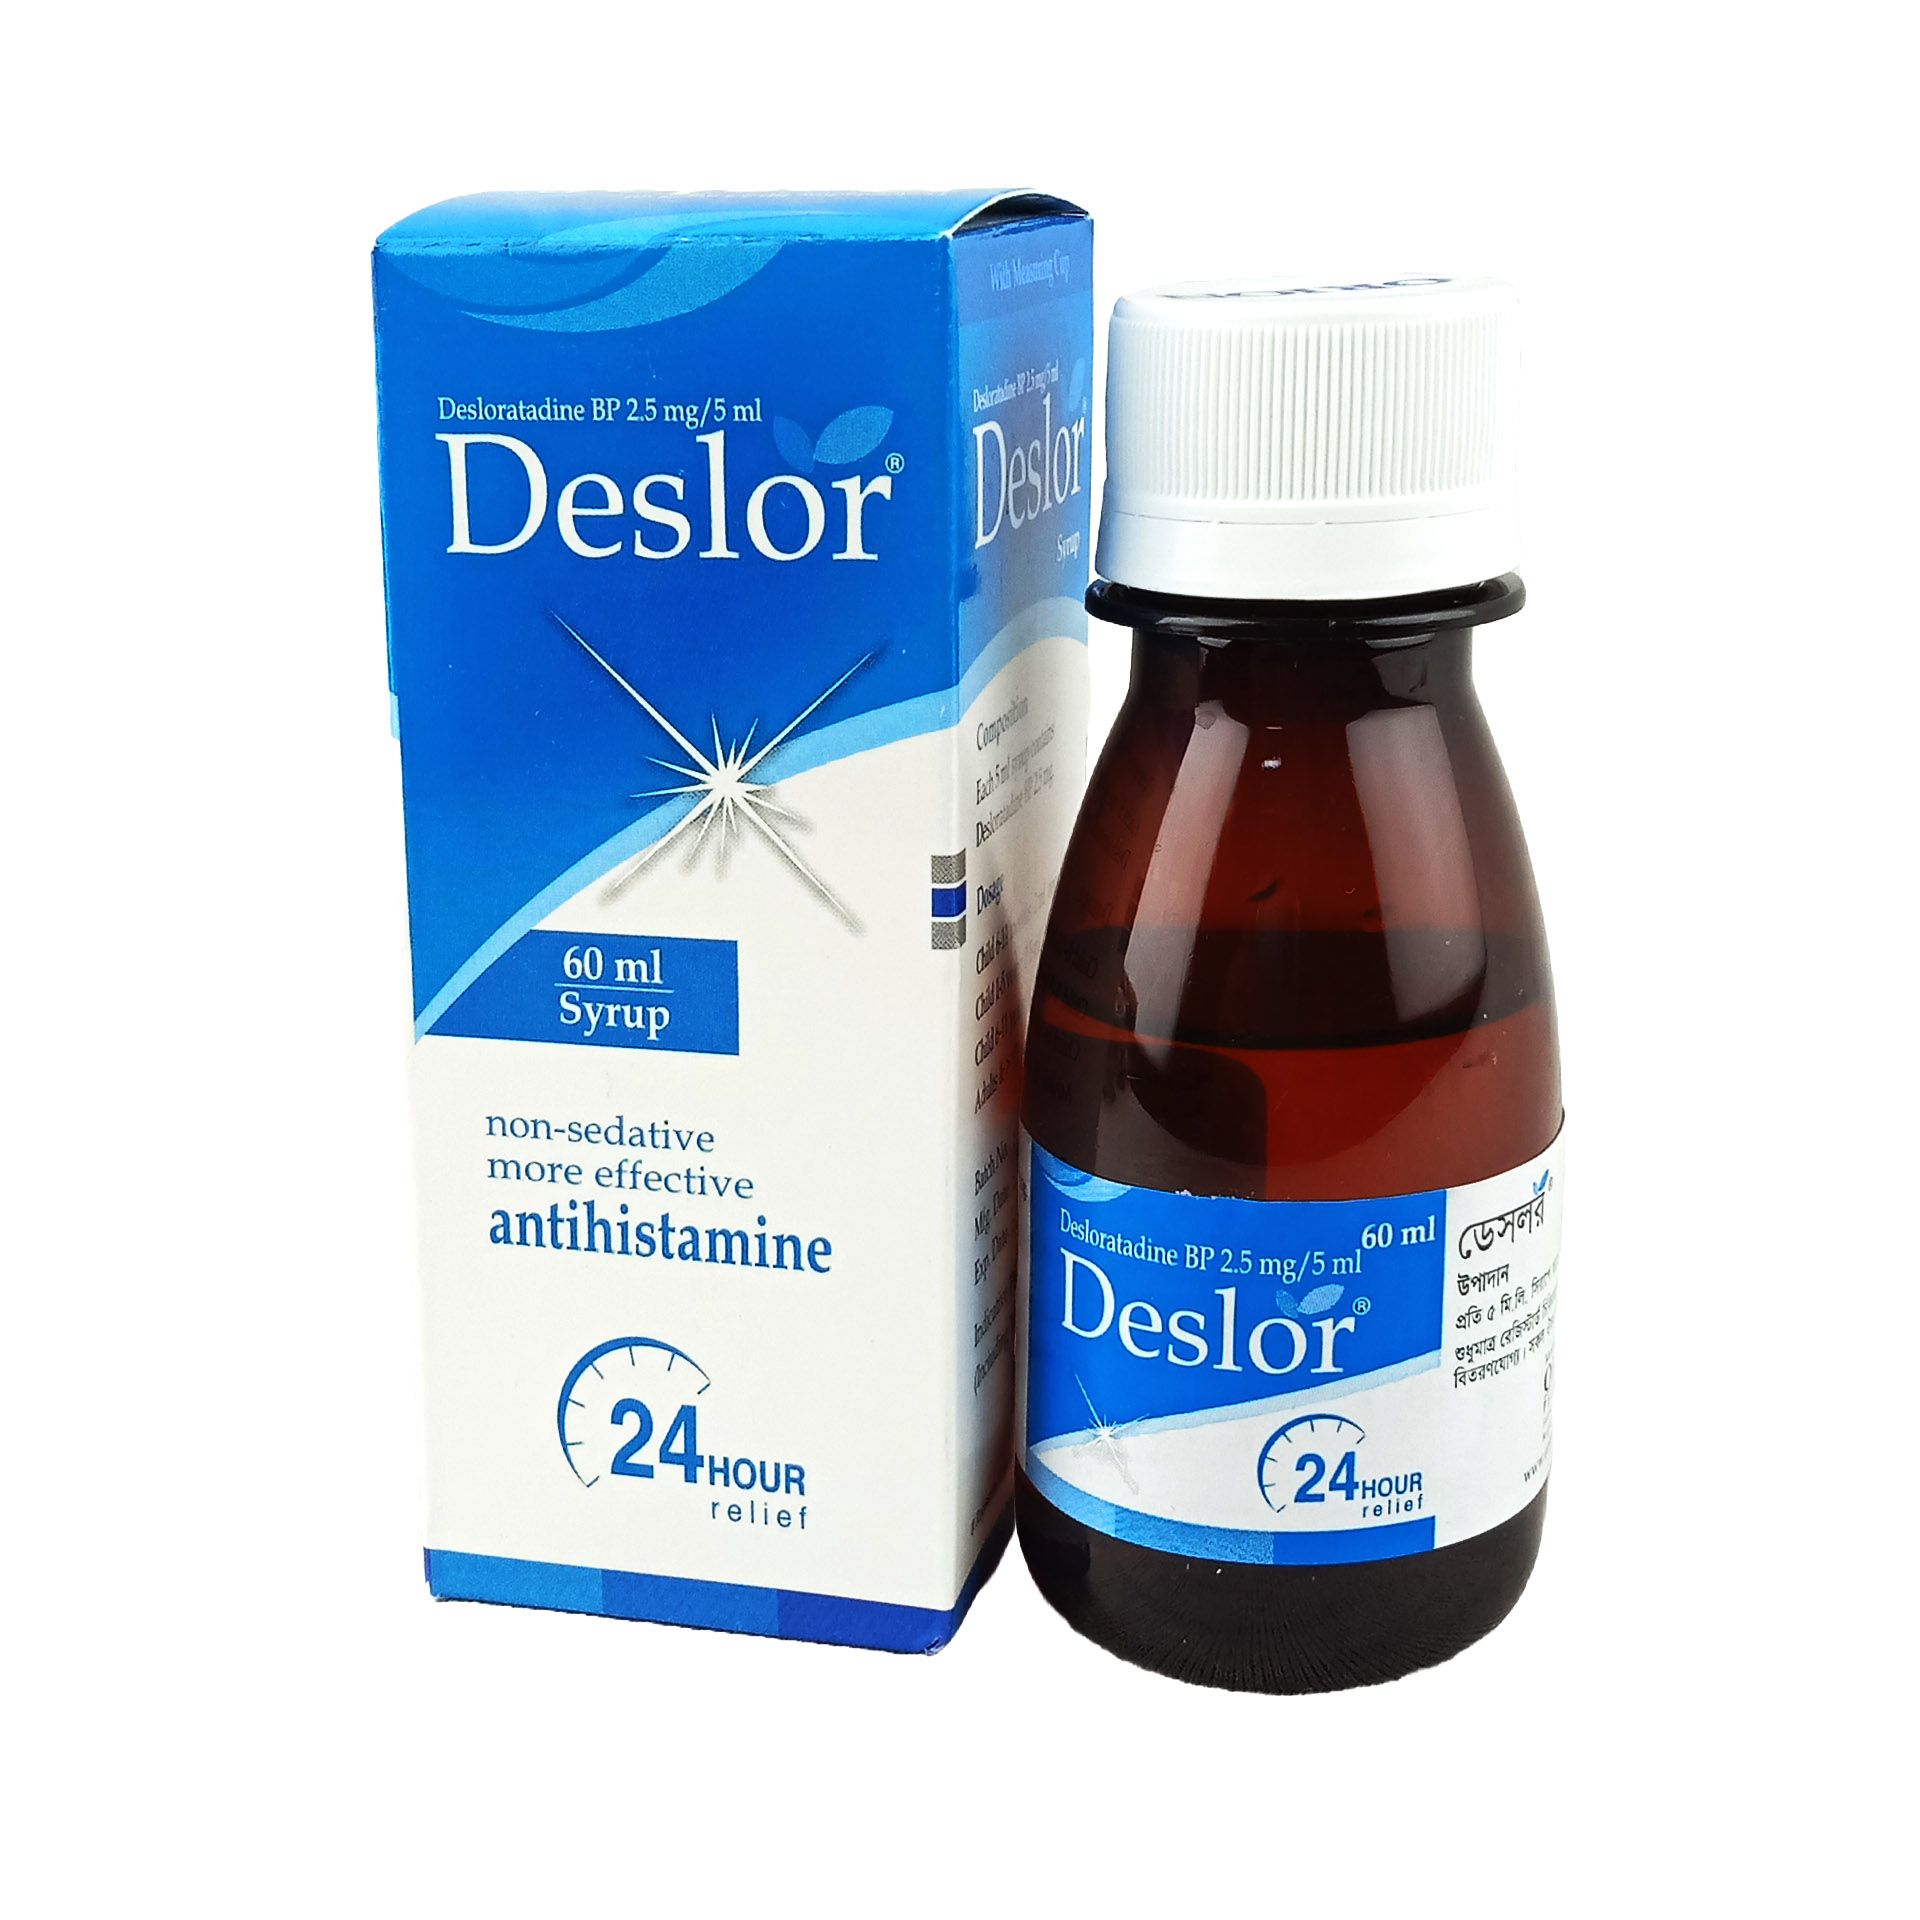 Deslorin 2.5mg/5ml Syrup